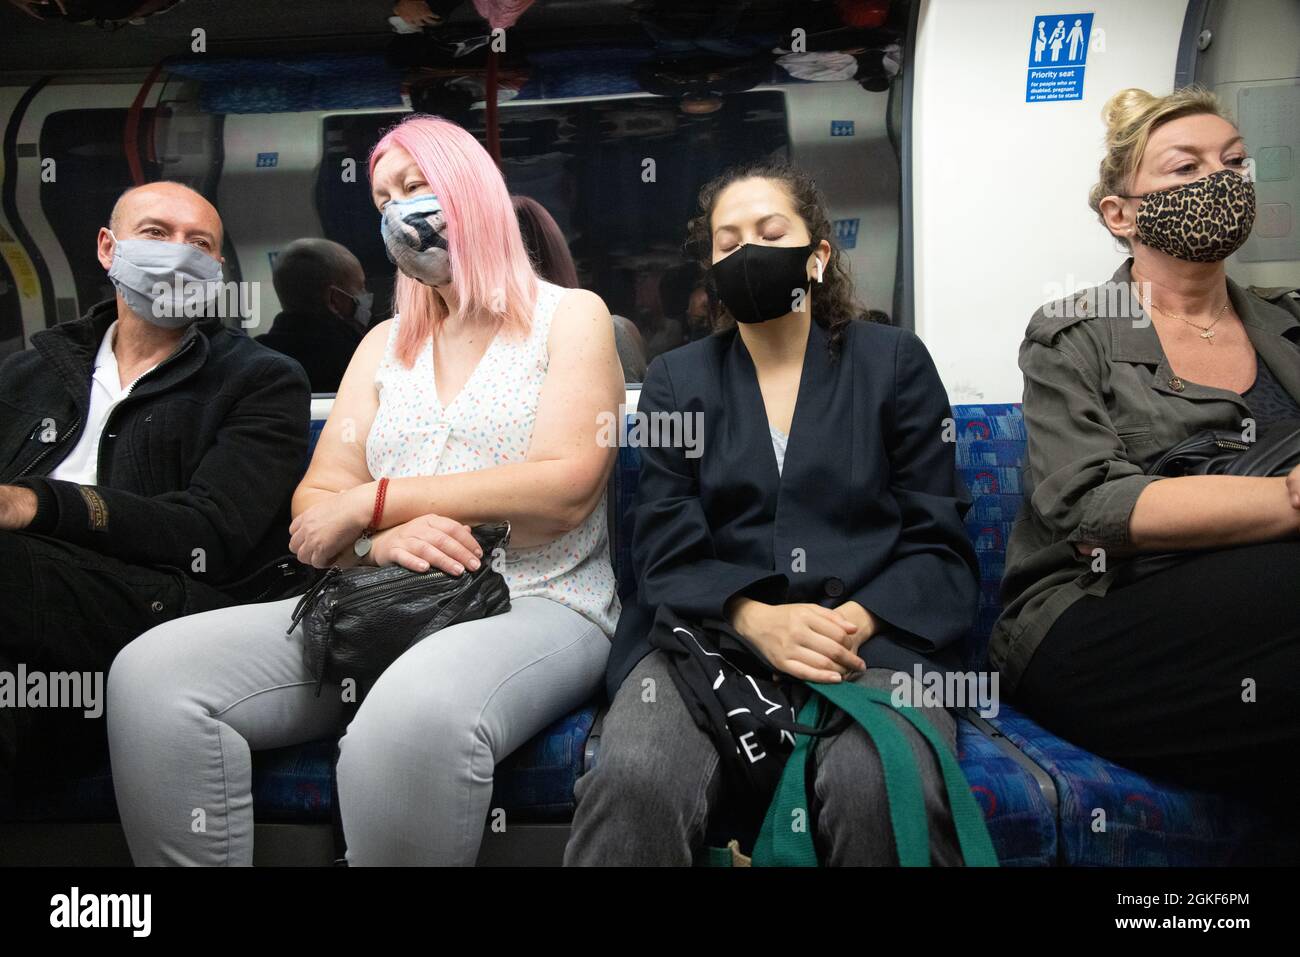 Covid 19 UK; People wearing masks during the COVID 19 pandemic travelling on the London Underground, London UK Stock Photo